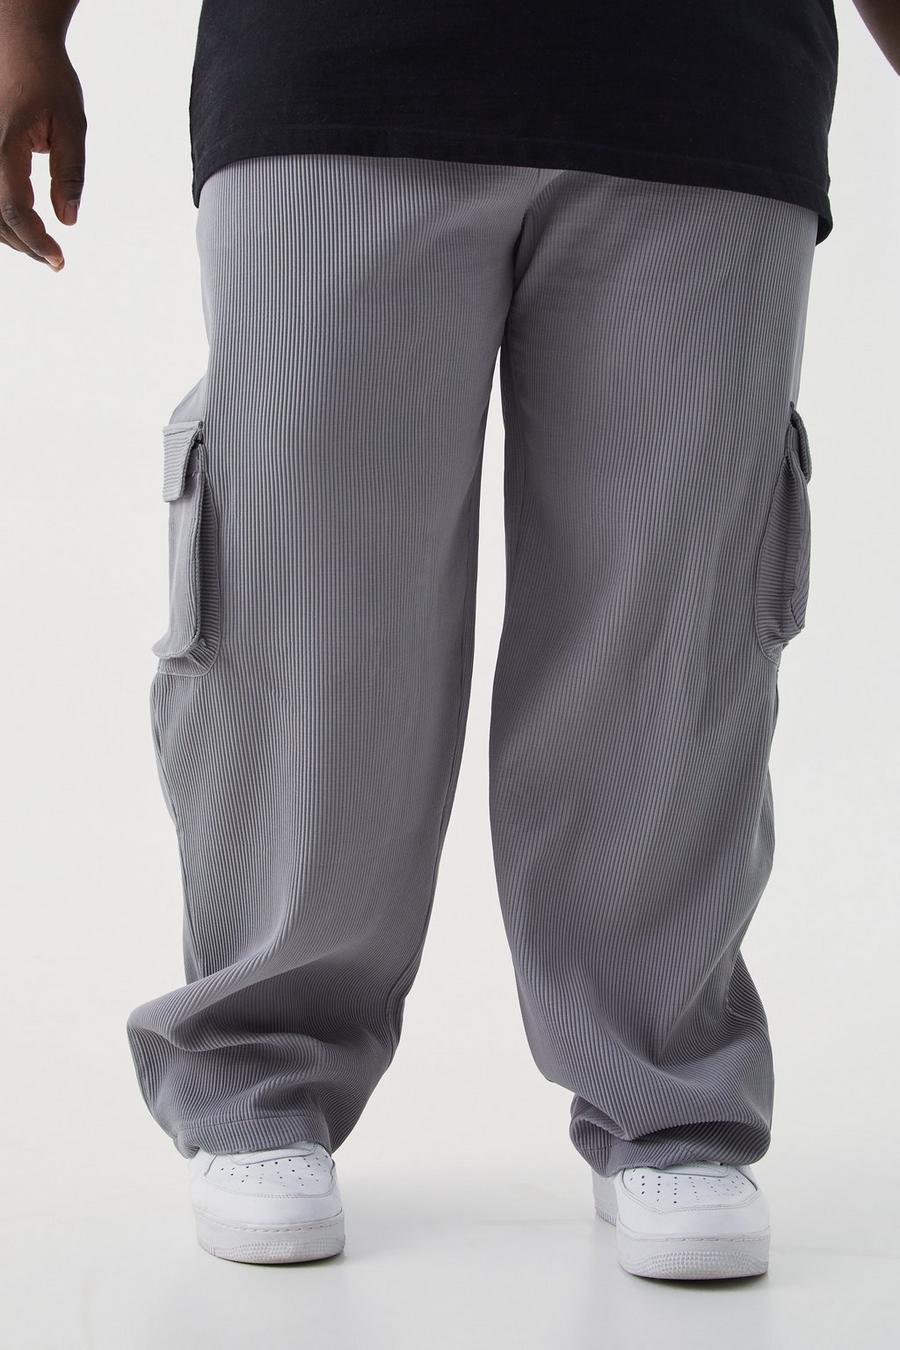 Grande taille - Pantalon cargo plissé, Charcoal grey